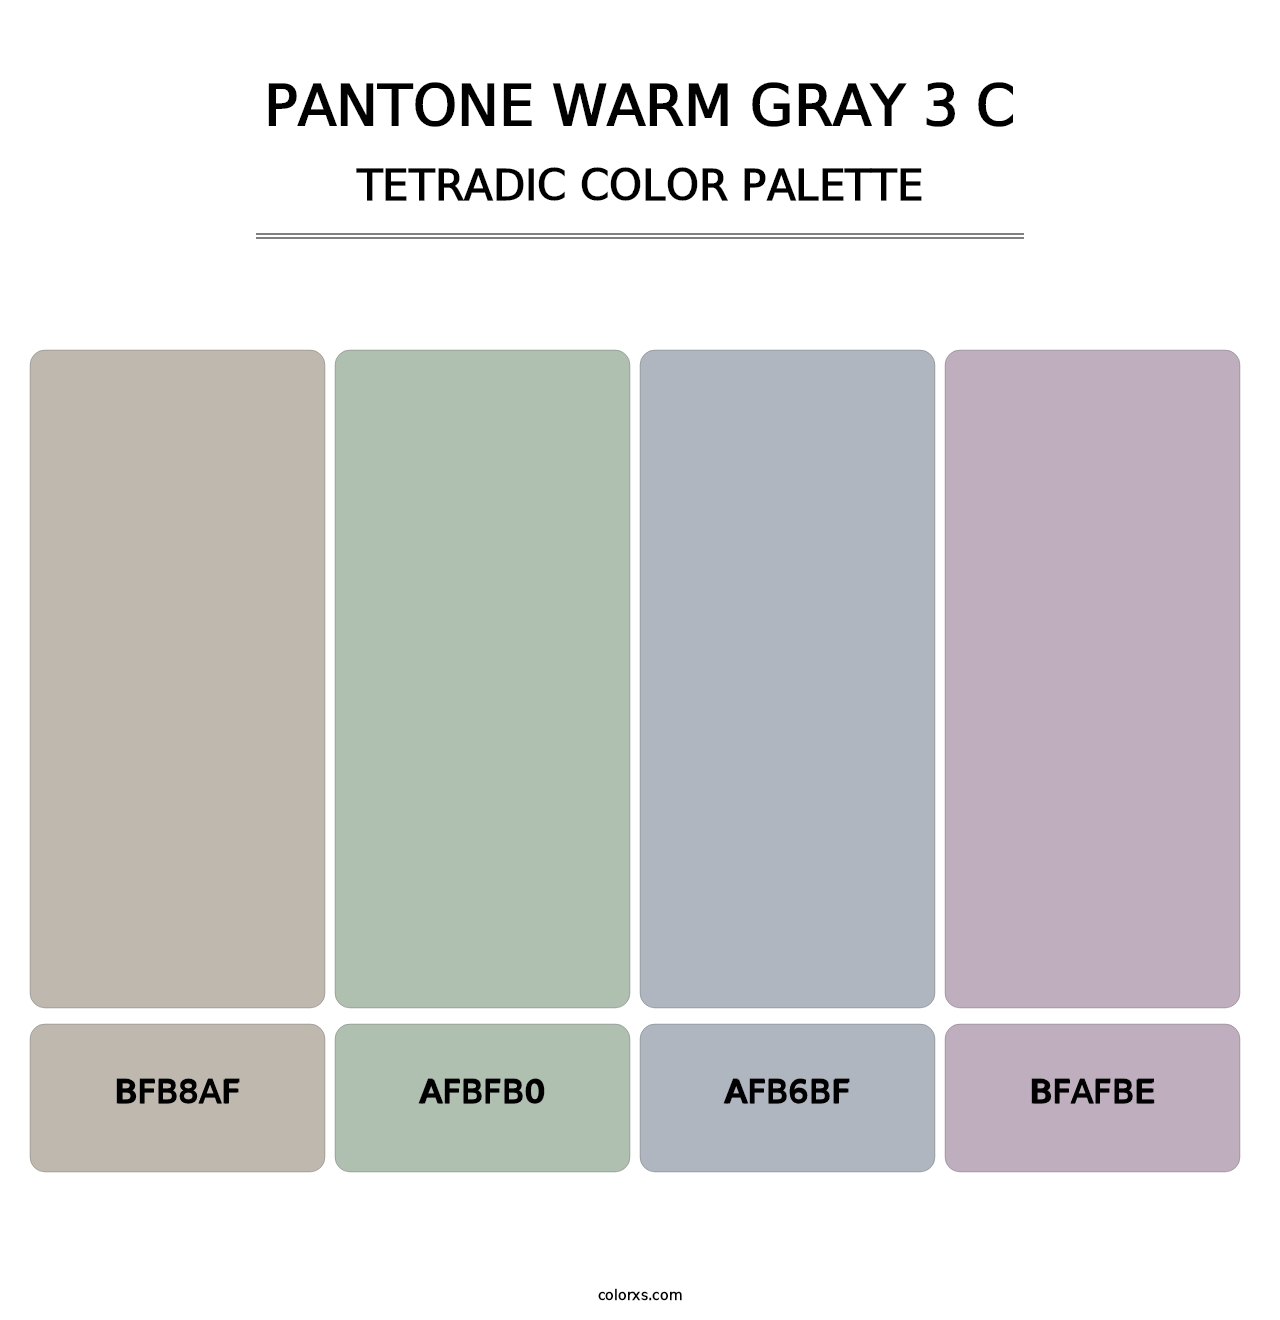 PANTONE Warm Gray 3 C - Tetradic Color Palette